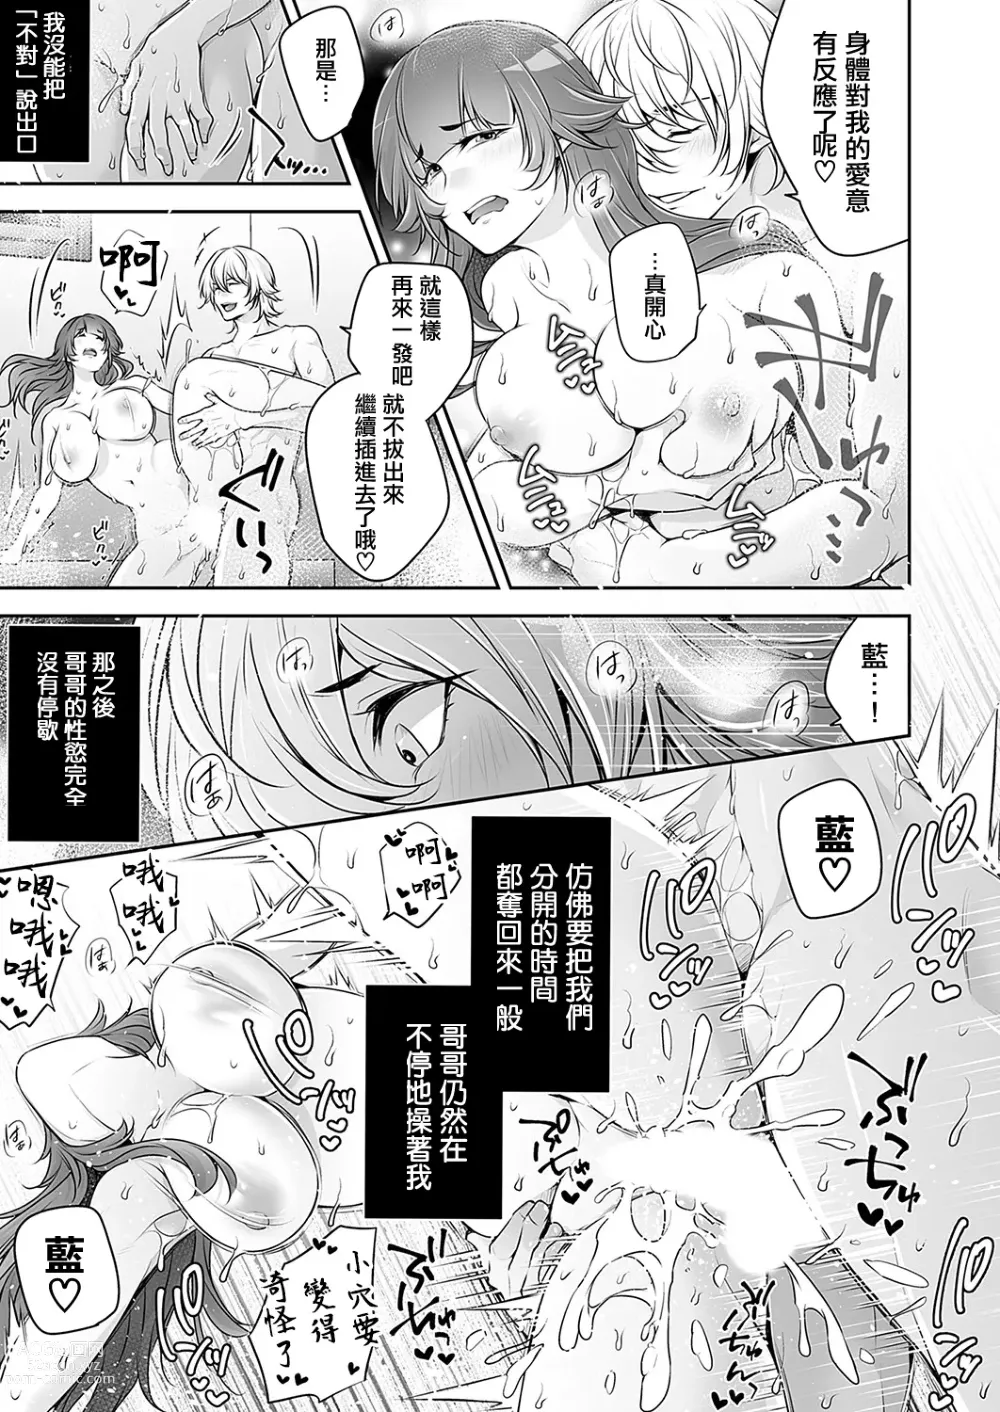 Page 15 of manga 背德兄妹SEX 持續不停貪求著已是人妻的妹妹的一星期